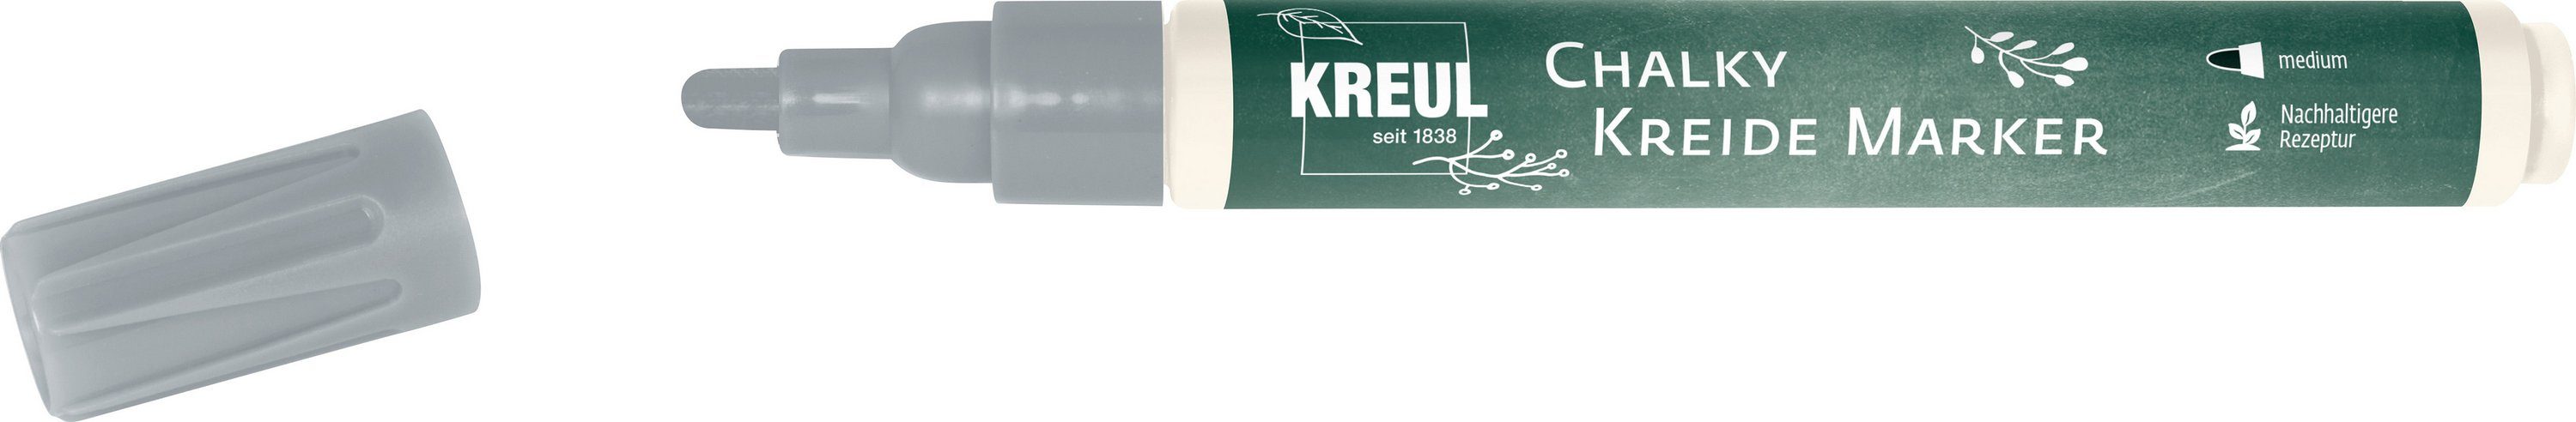 Kreul Kreidemarker Chalky, 2-3mm Strichstärke Silver Show | Marker